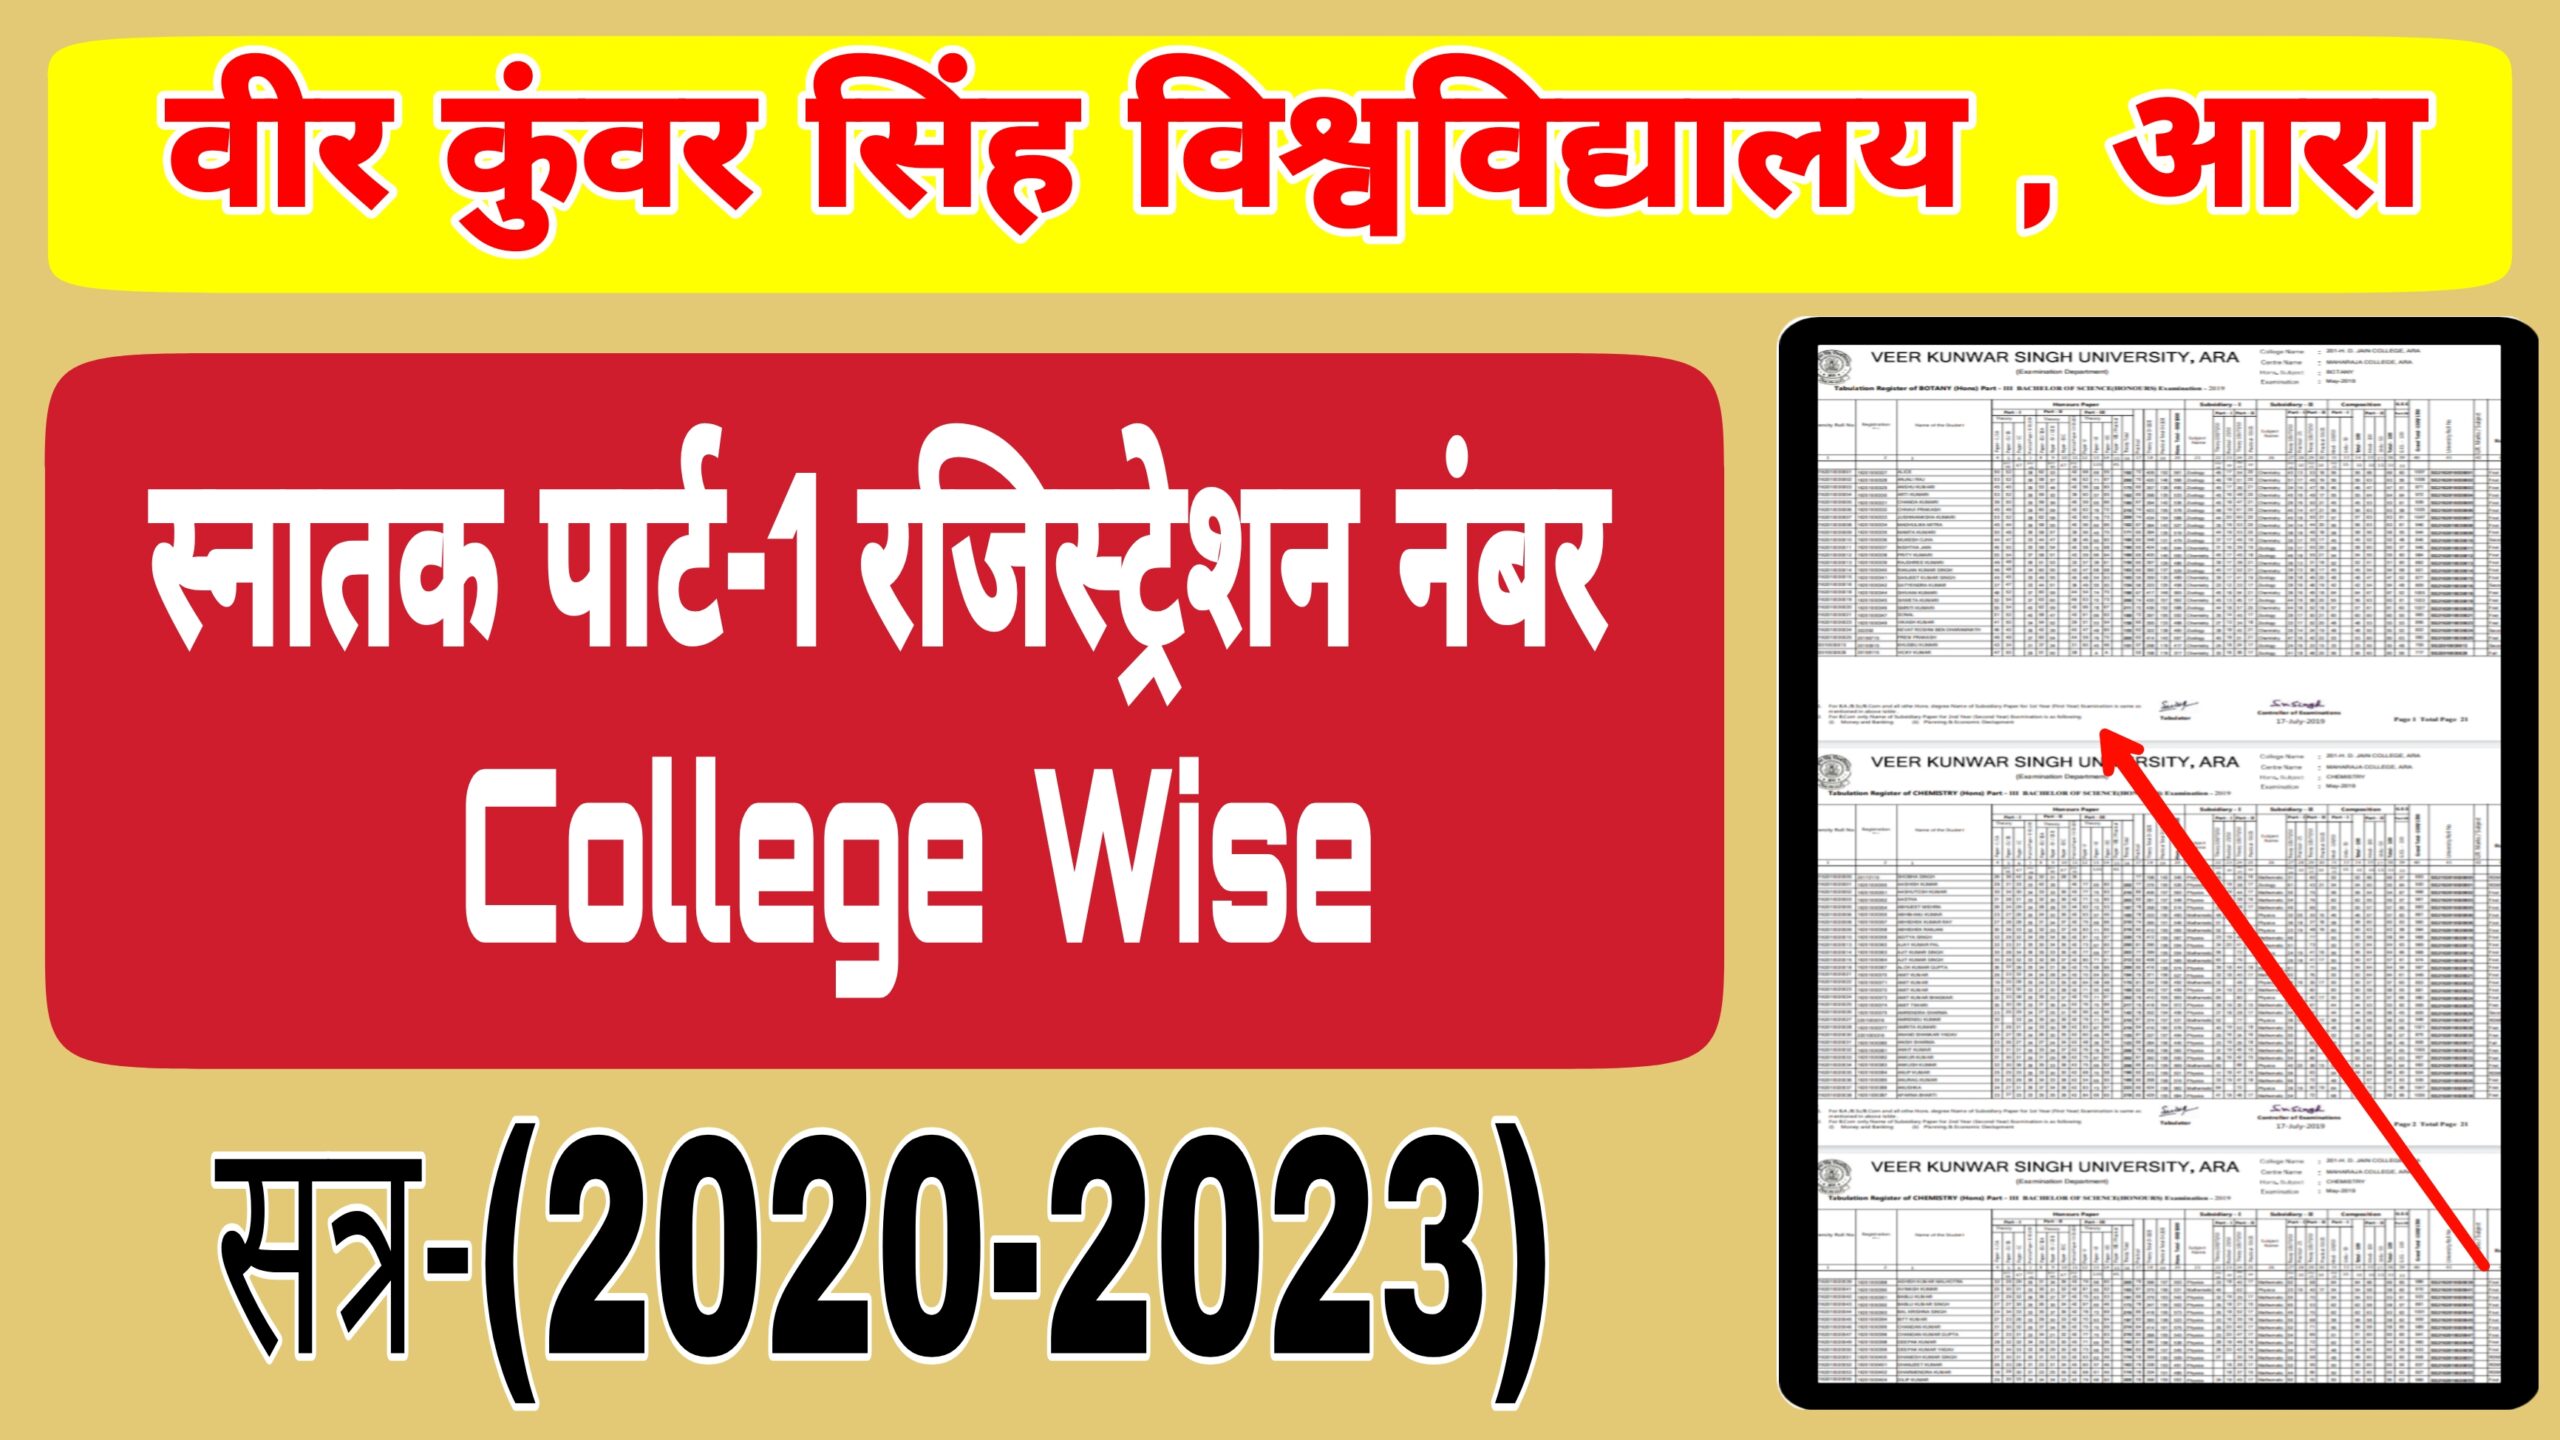 Vksu Ara Part 1 Registration Number College wise Download (2020-2023)